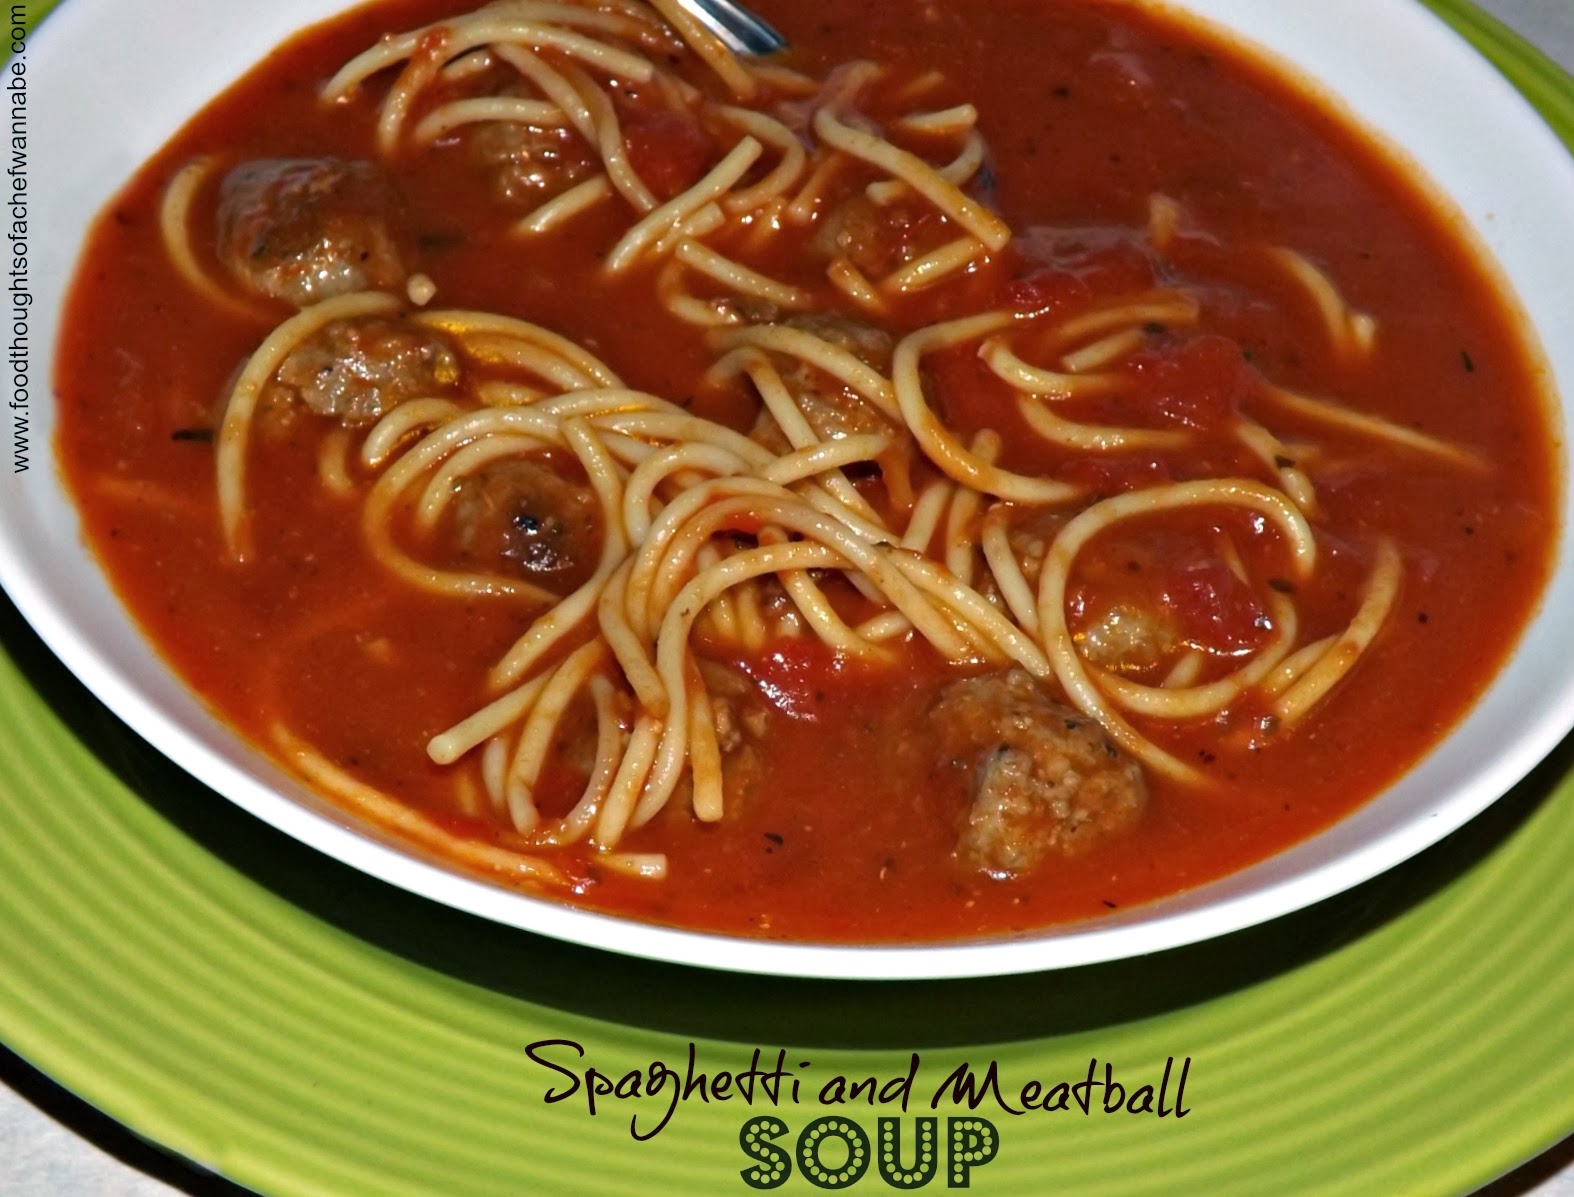 Суп с спагетти. Суп со спагетти. Борщ с макаронами. Спагетти в суп вместо вермишели. Суп с длинными спагетти.